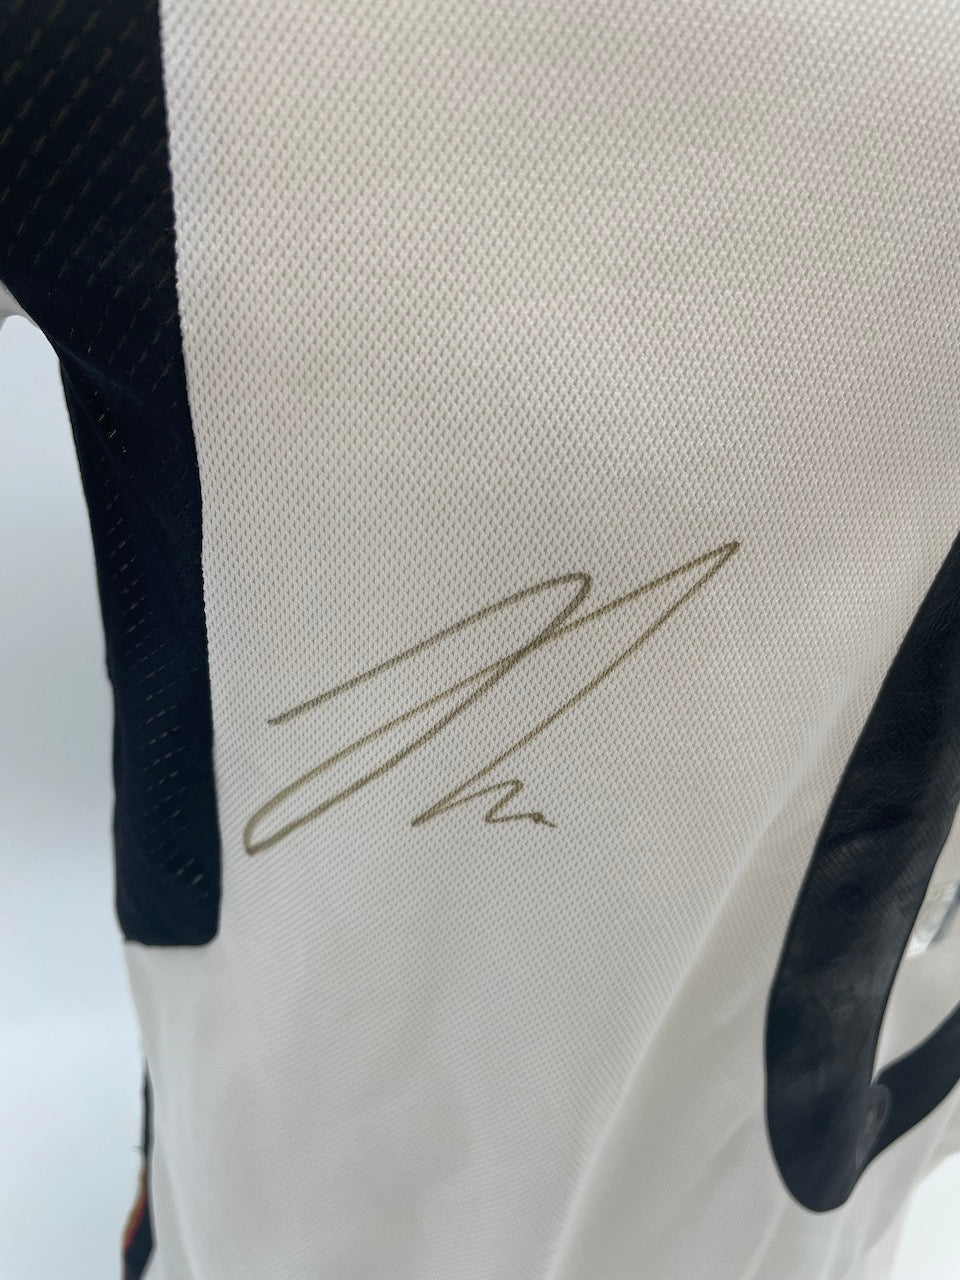 DFB Trikot Joshua Kimmich signiert Adidas COA Deutschland DFB Autogramm Neu 164